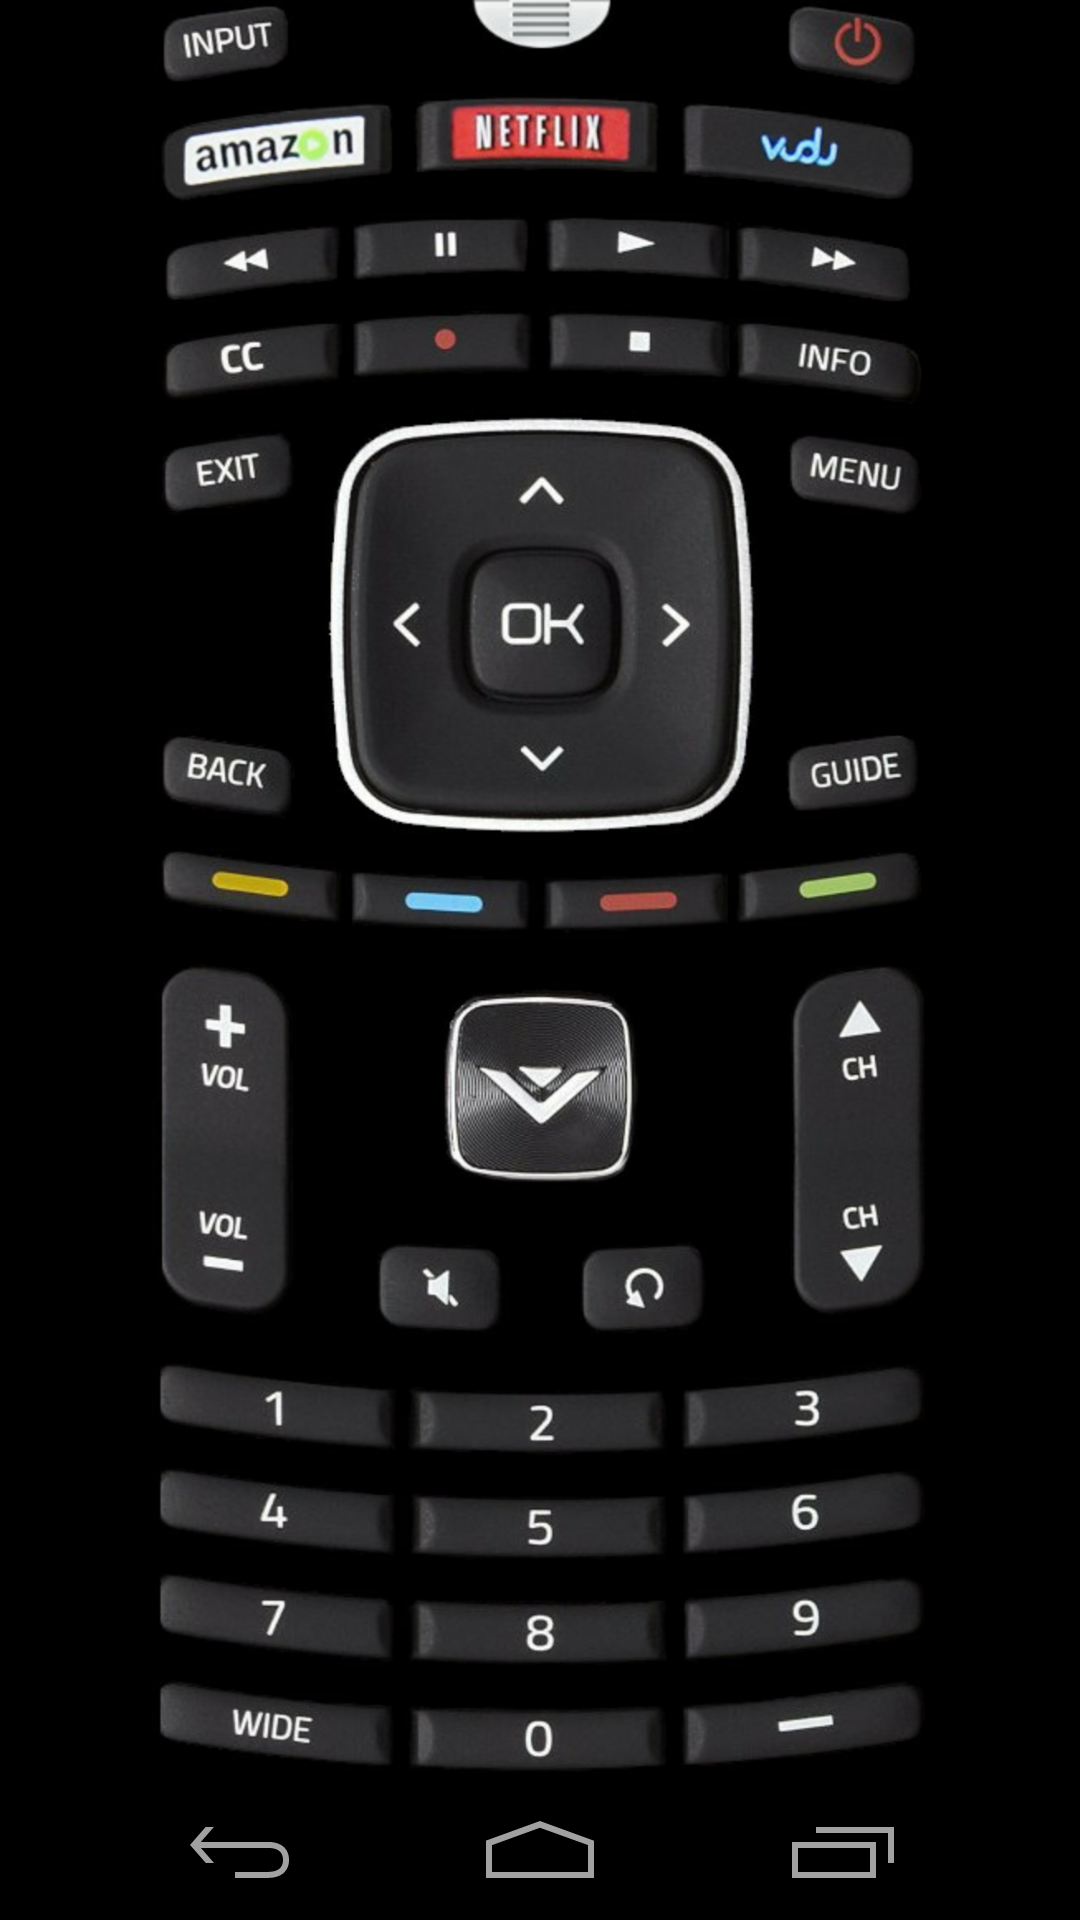 Android application Remote Control for Vizio TV screenshort